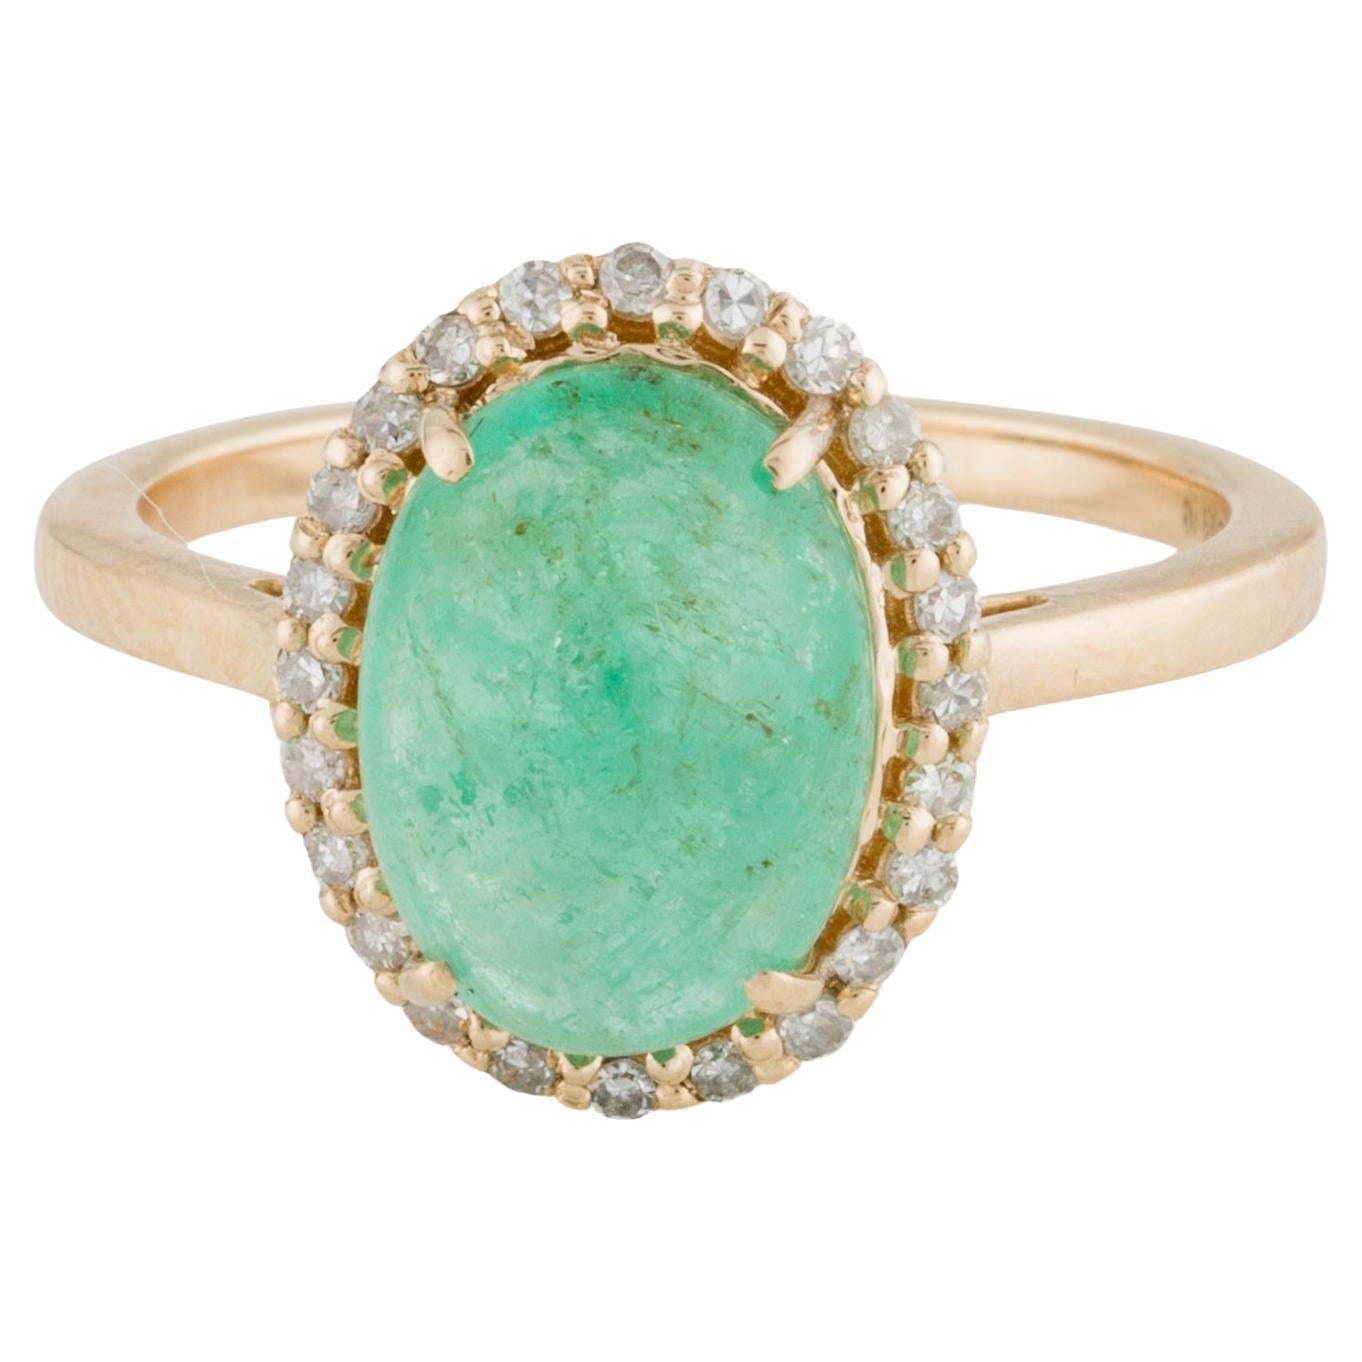 Luxurious 14K Emerald & Diamond Cocktail Ring - 3.59ct Gemstone - Size 6.75